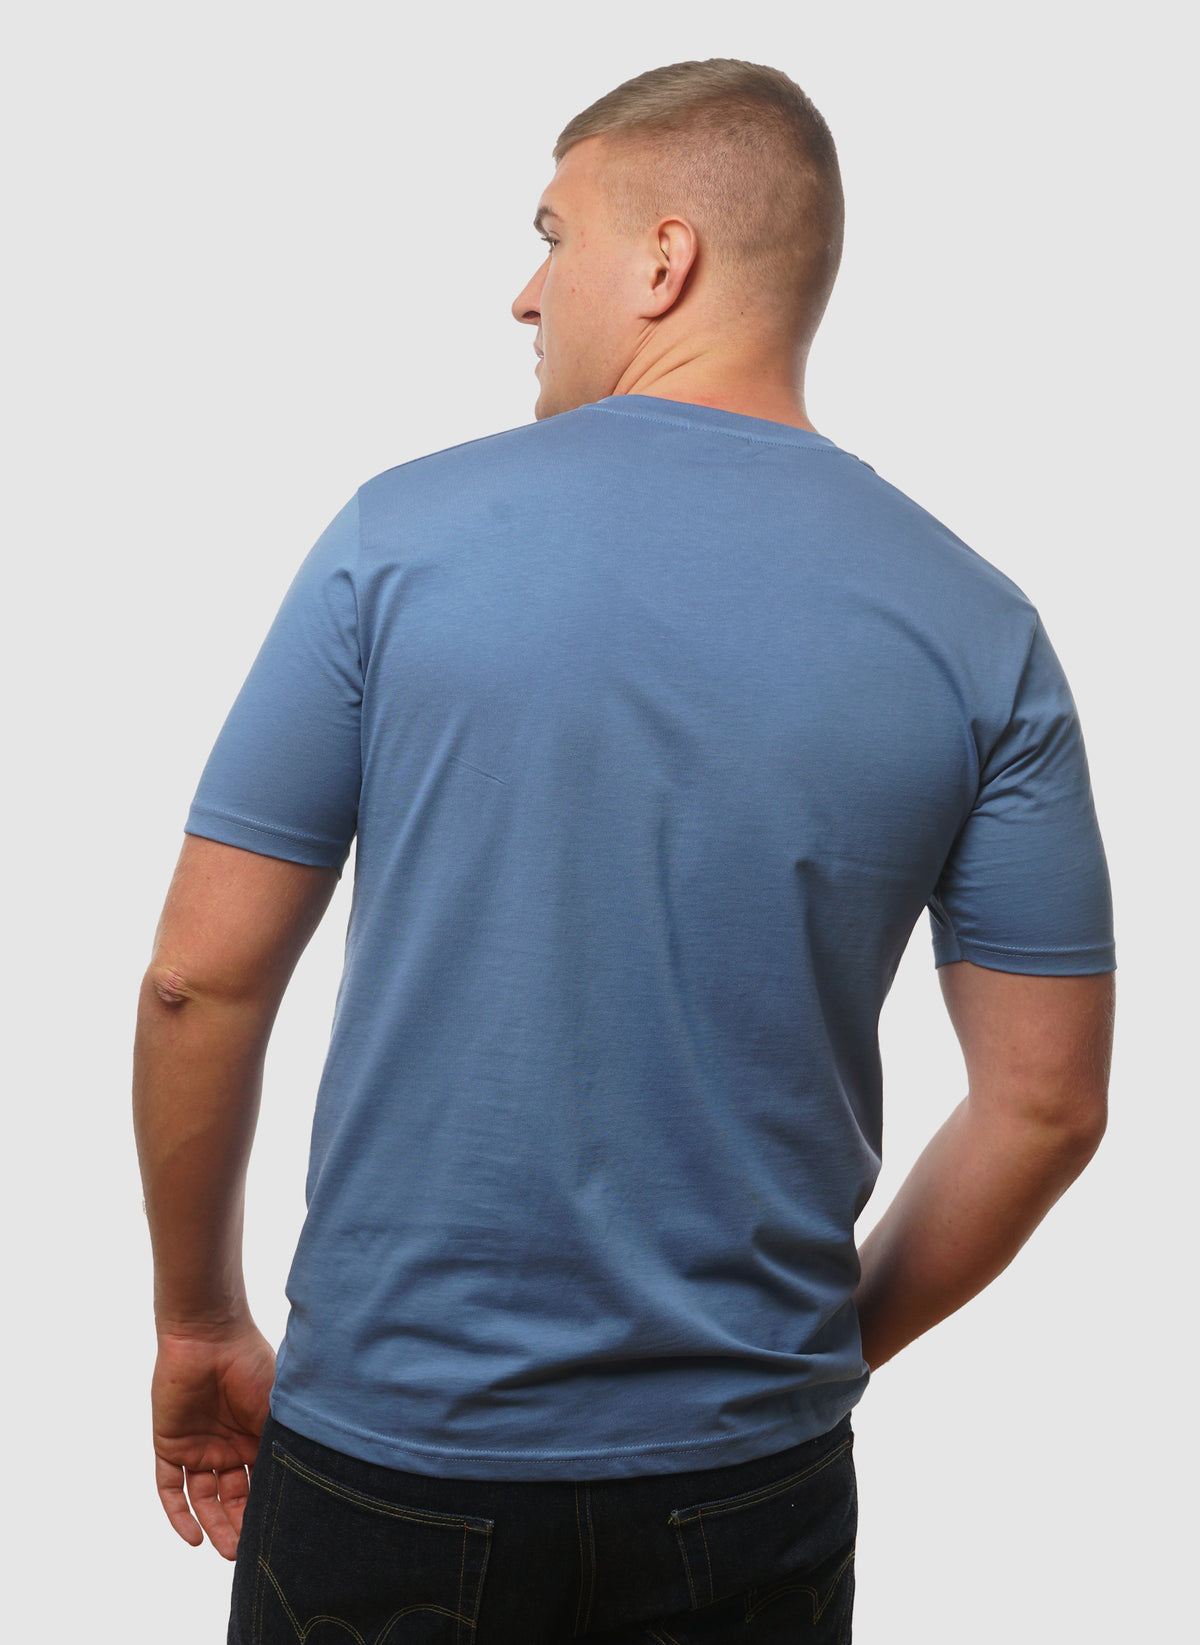 Compellioni T-Shirt - Dark Blue